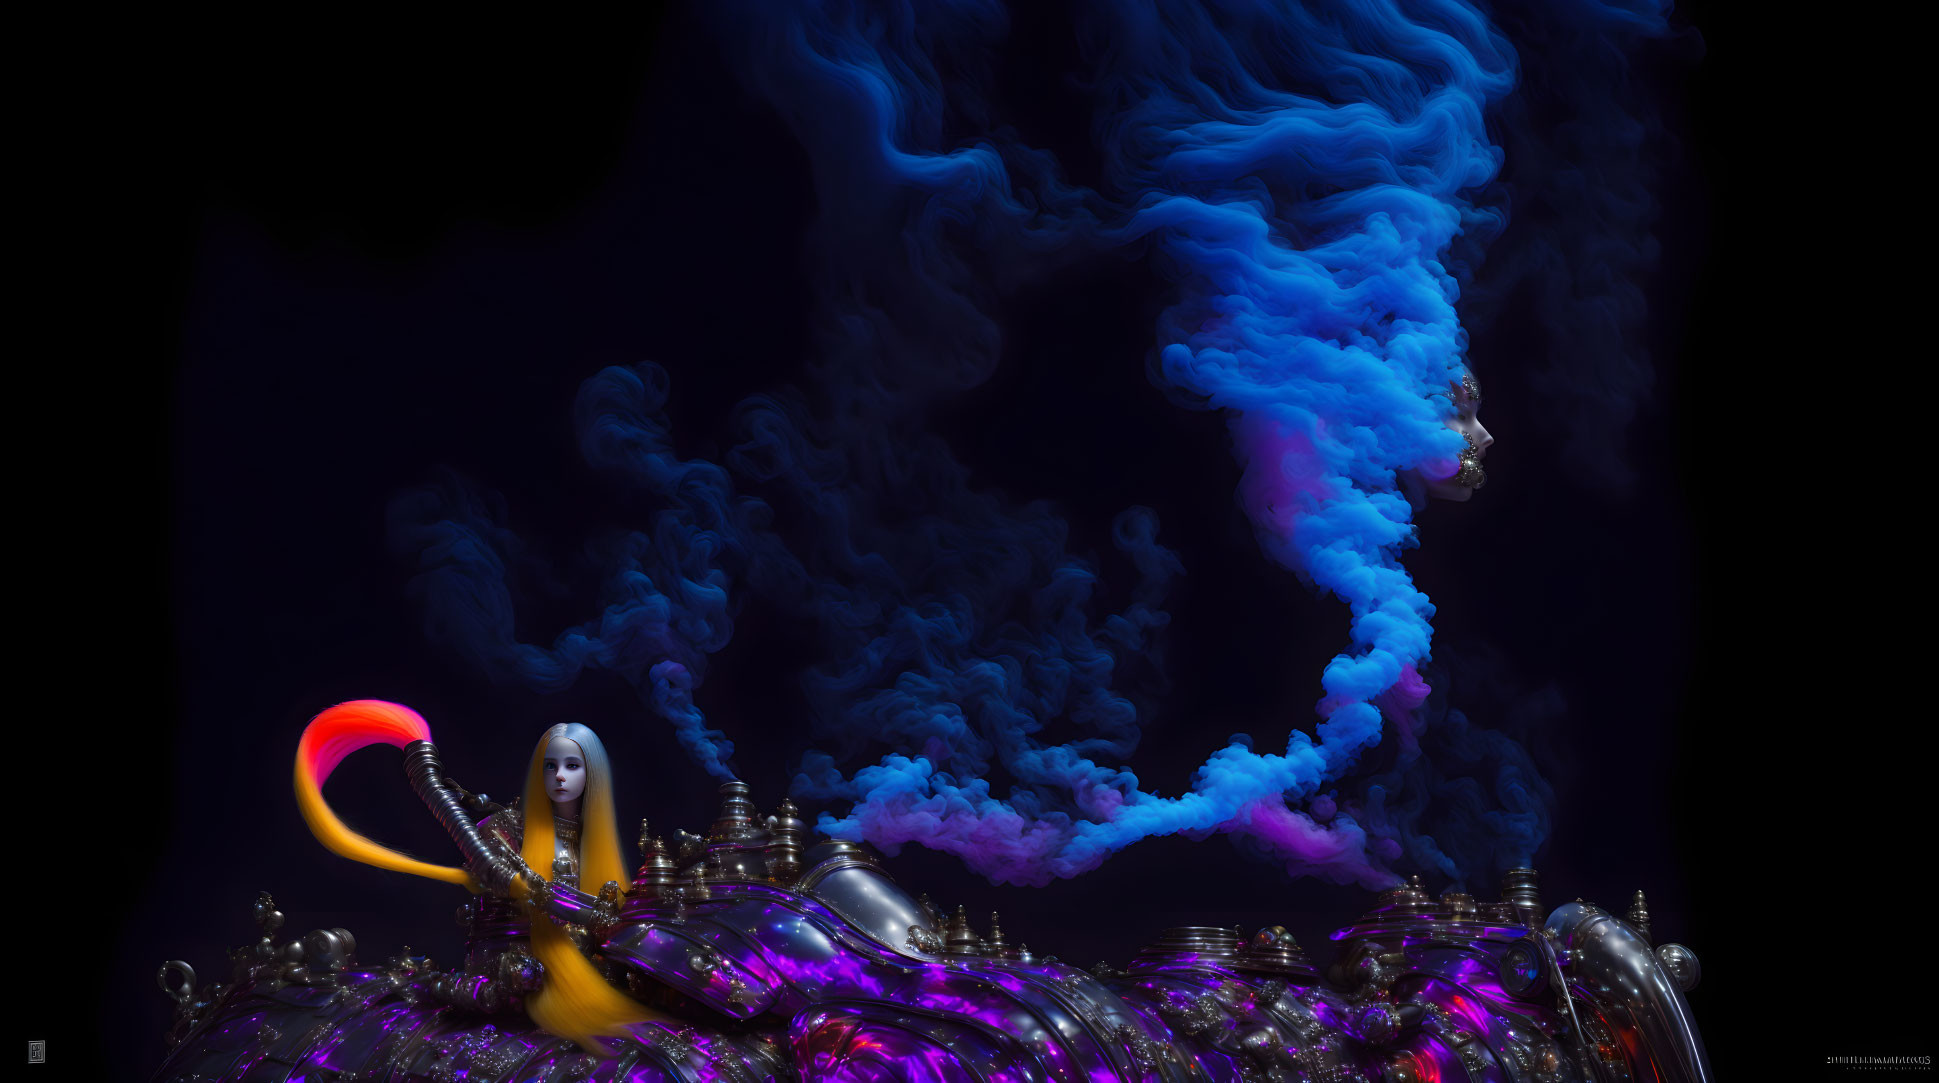 Surreal artwork: Female figure in metallic structure emitting blue smoke